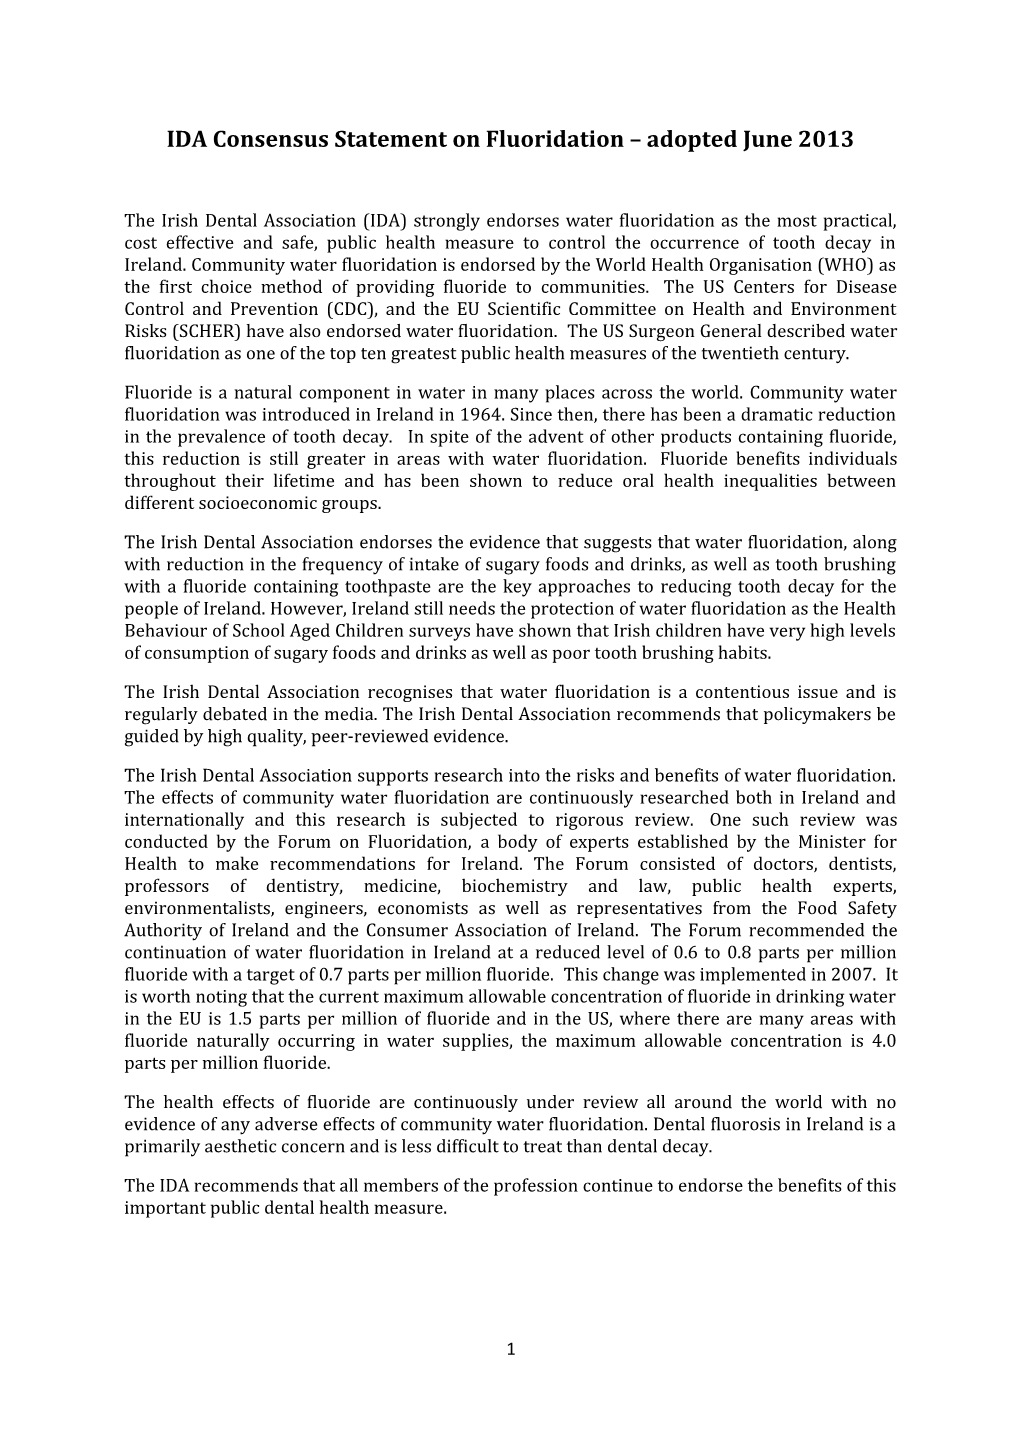 IDA Consensus Statement on Fluoridation Adopted June 2013